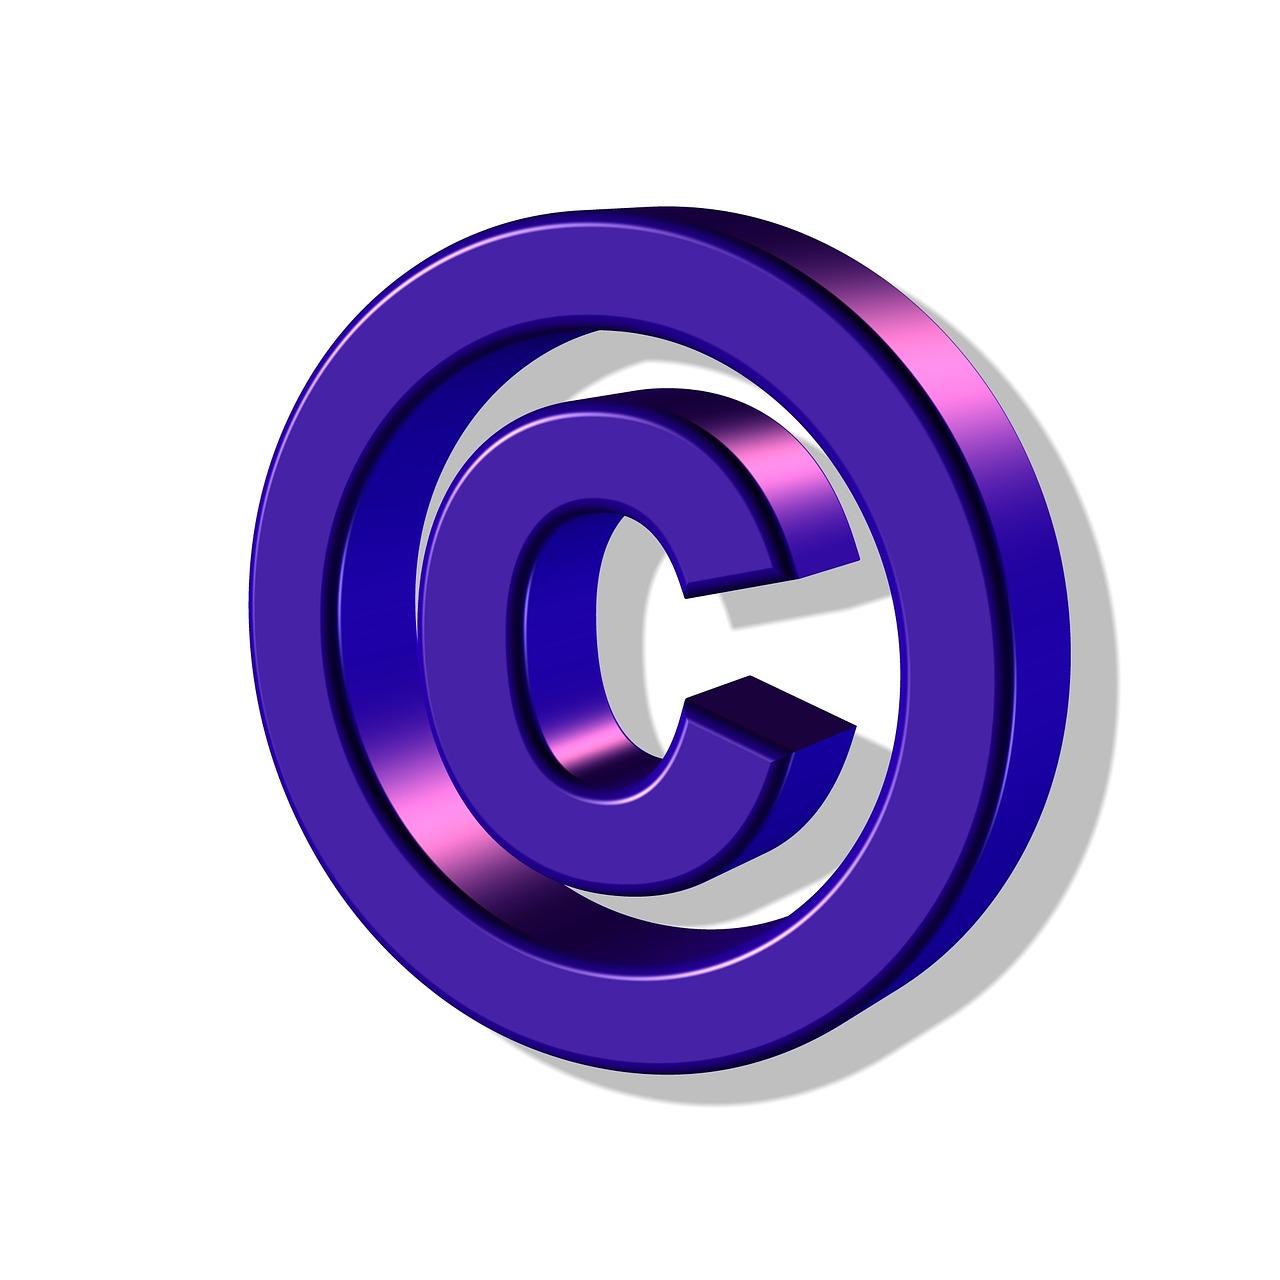 copyright symbol sign free photo